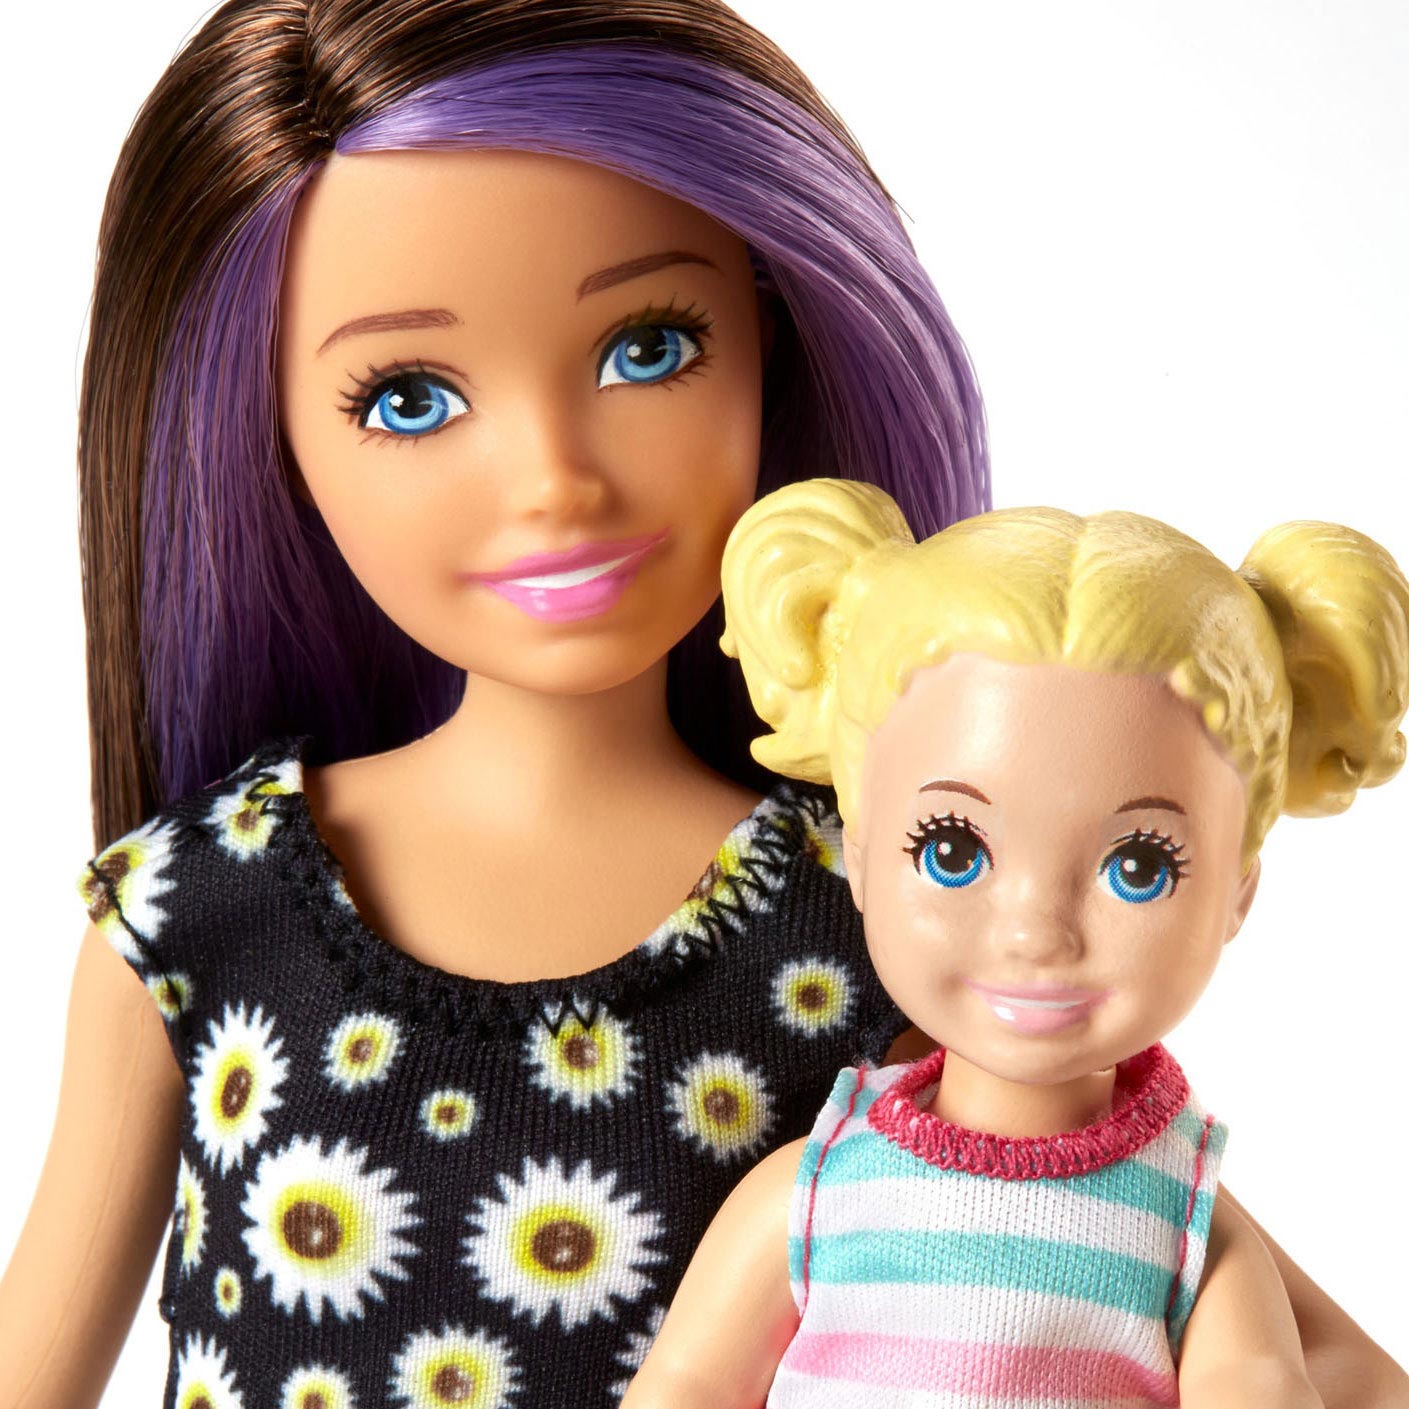 Barbie Skipper Babysitters - Potty Training